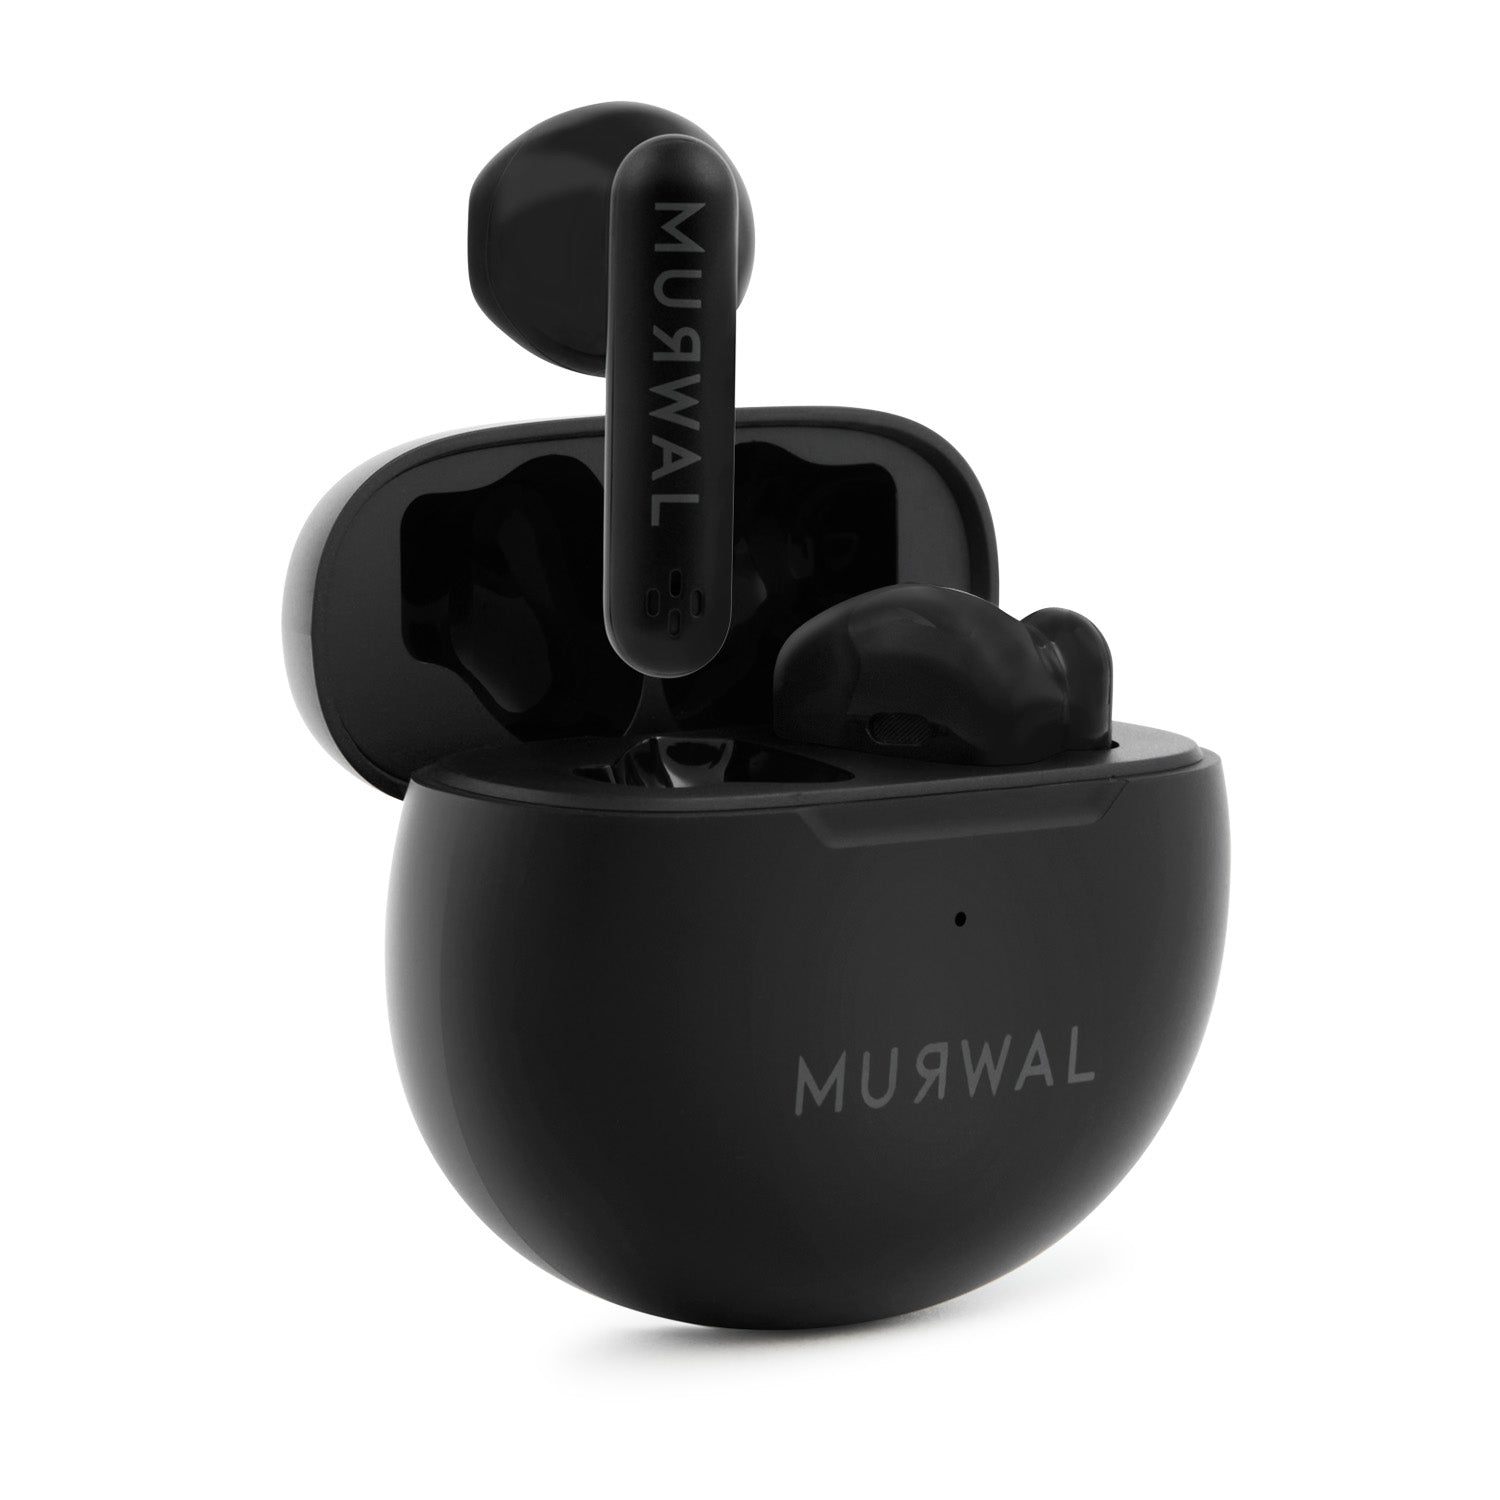 AURICULARES Bluetooth inalámbricos MURWAL GLOBE BLACK EDITION con microfono  20 Horas de reproducción, IPX5 Impermeable, reducción